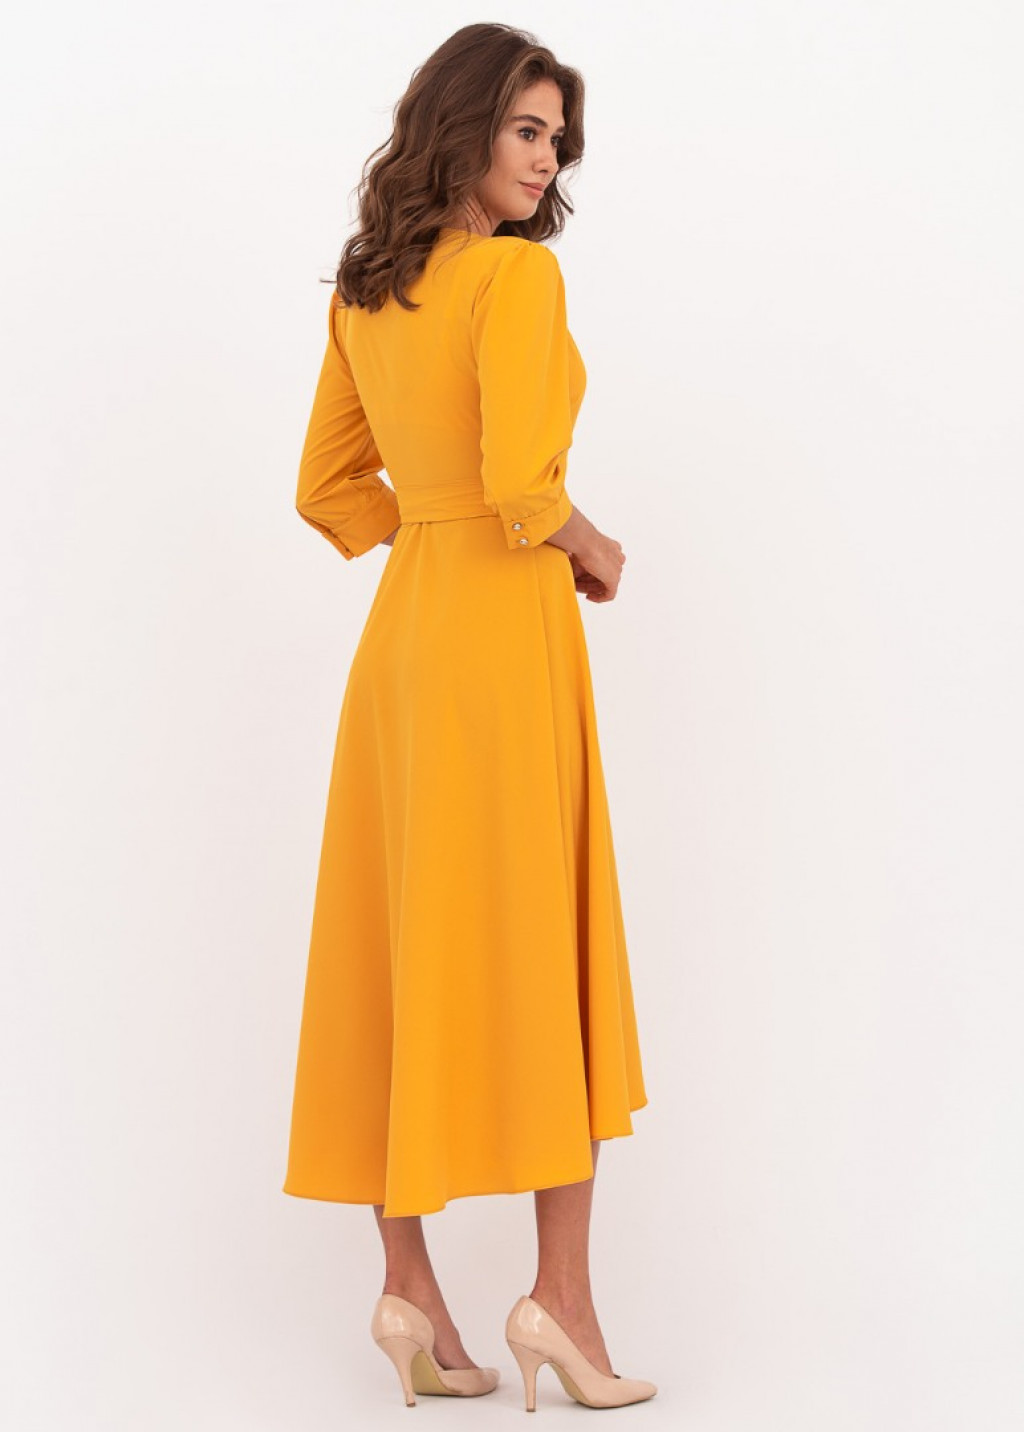 Honey yellow wrap dress